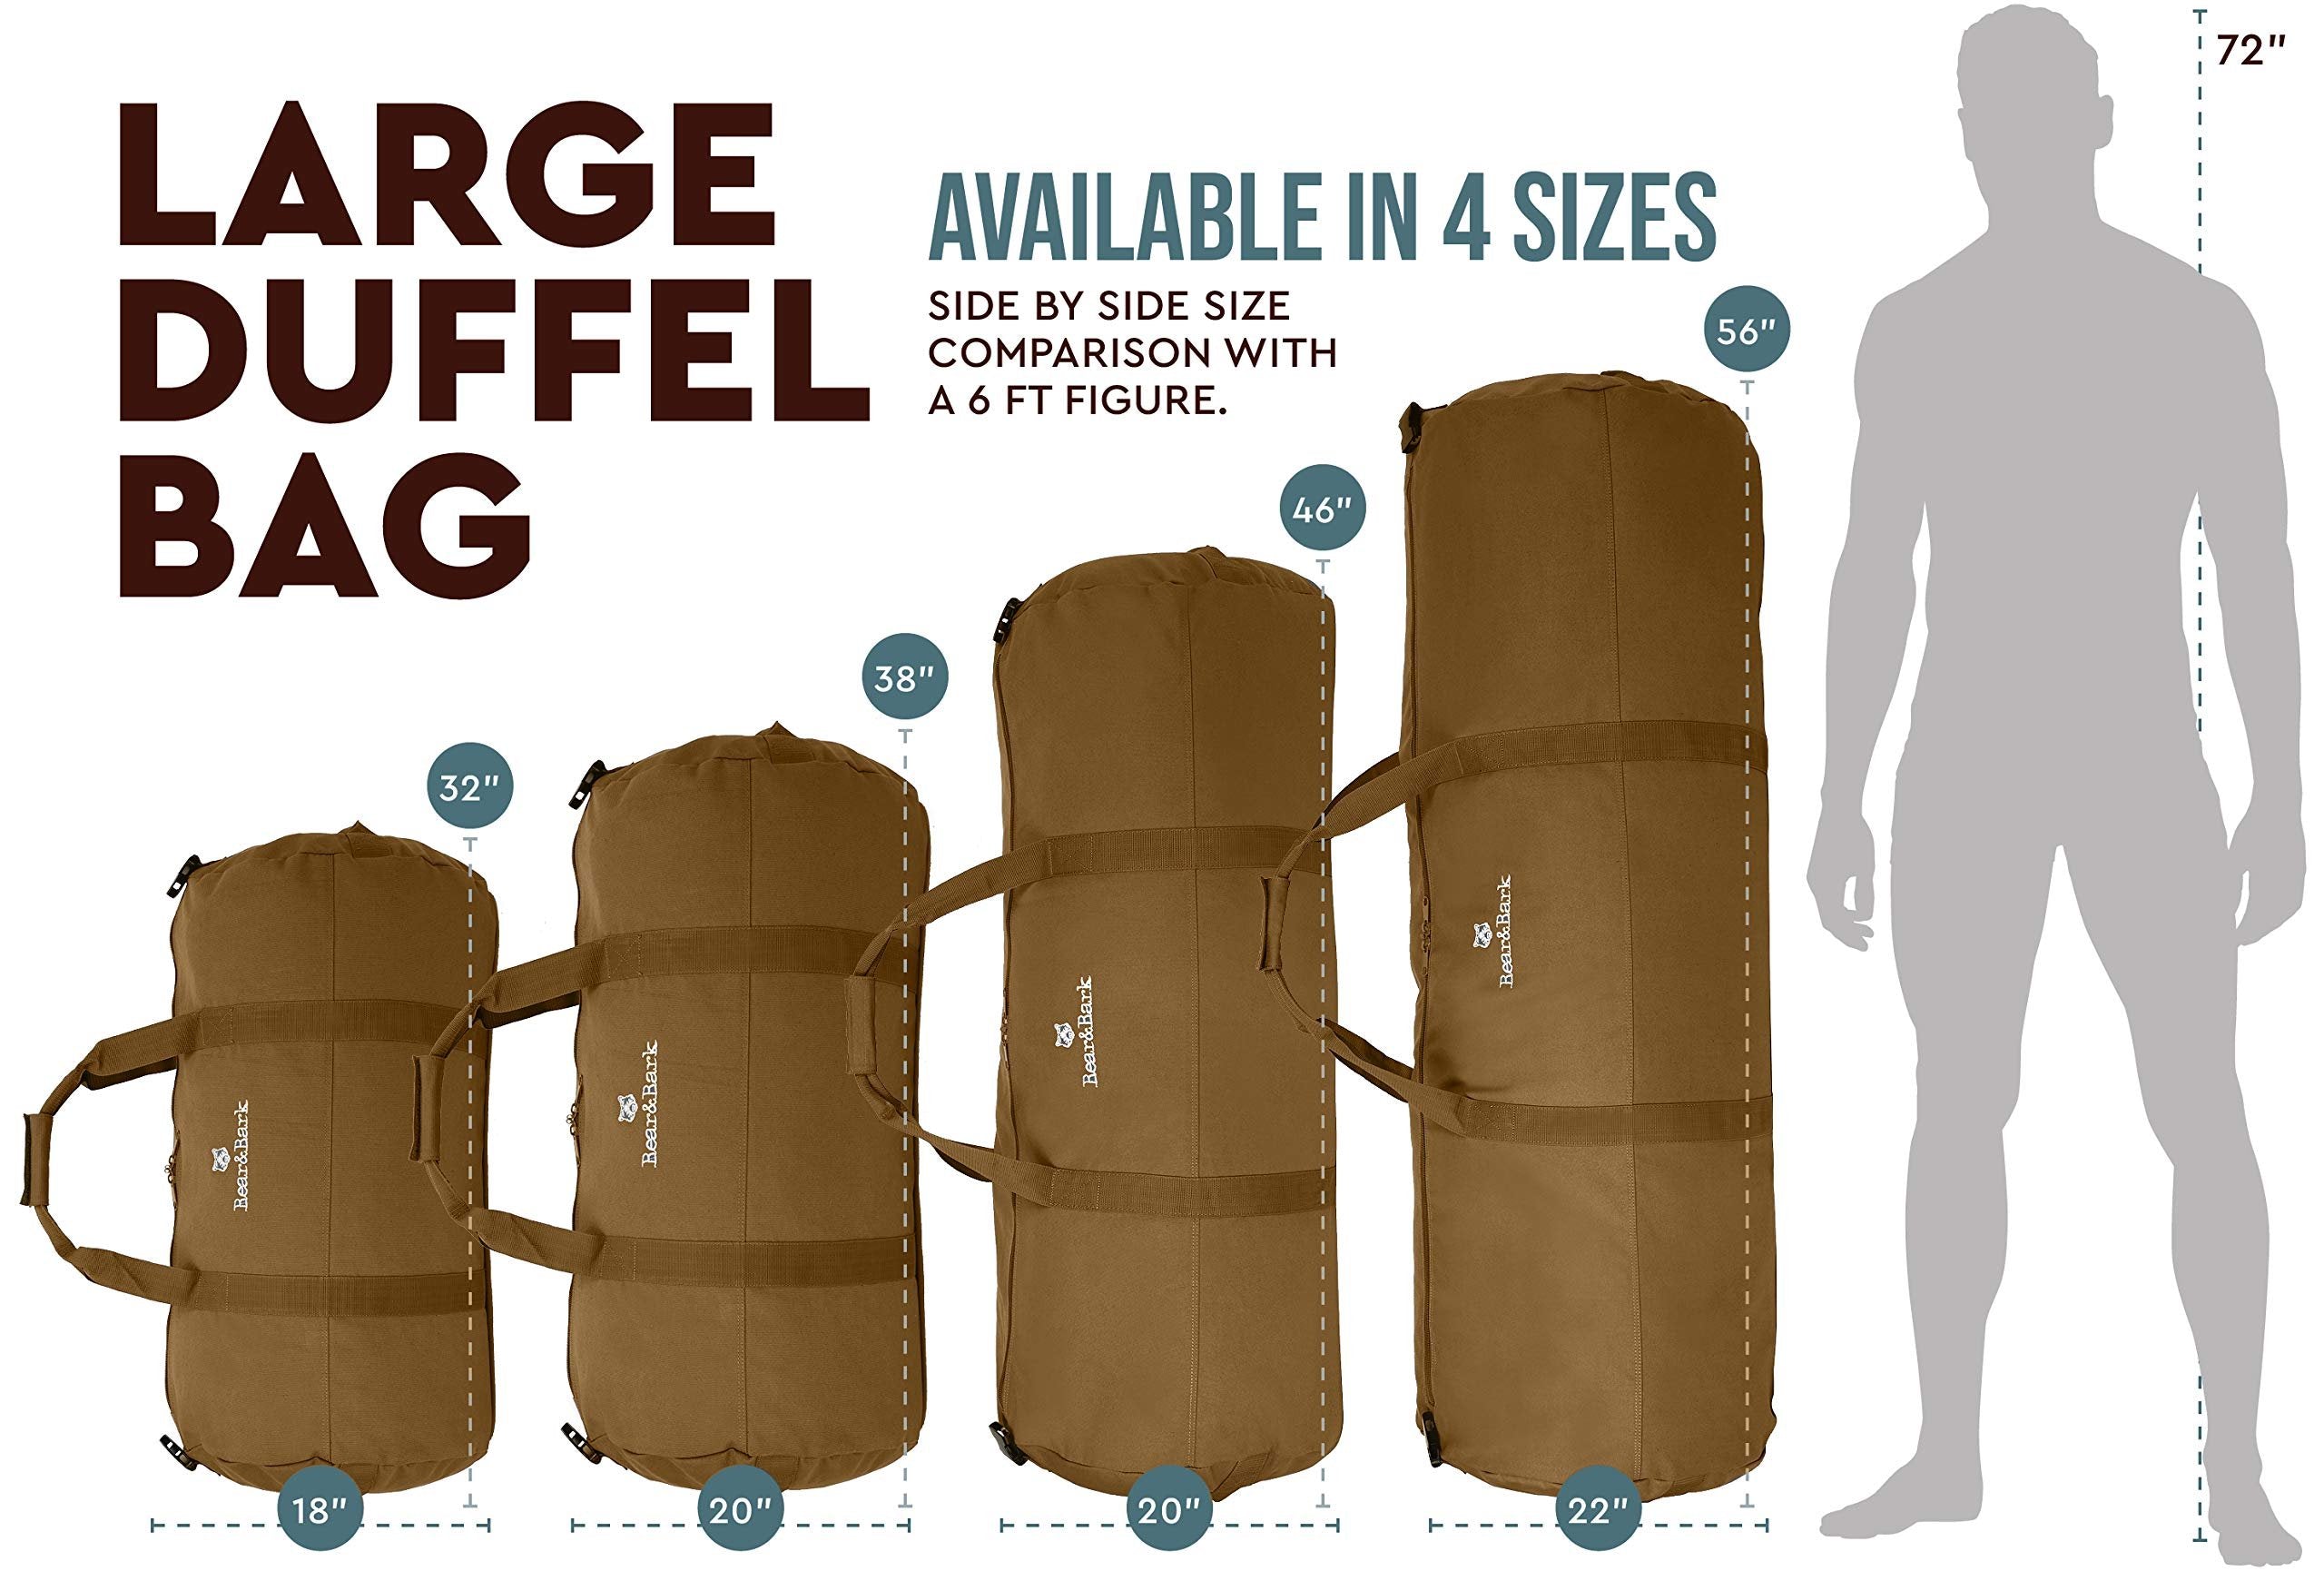 Bear&Bark Desert Brown Duffle Bag - Standard 32 X 18" - 133.4L - Military Style Travel Luggage for Men and Women"